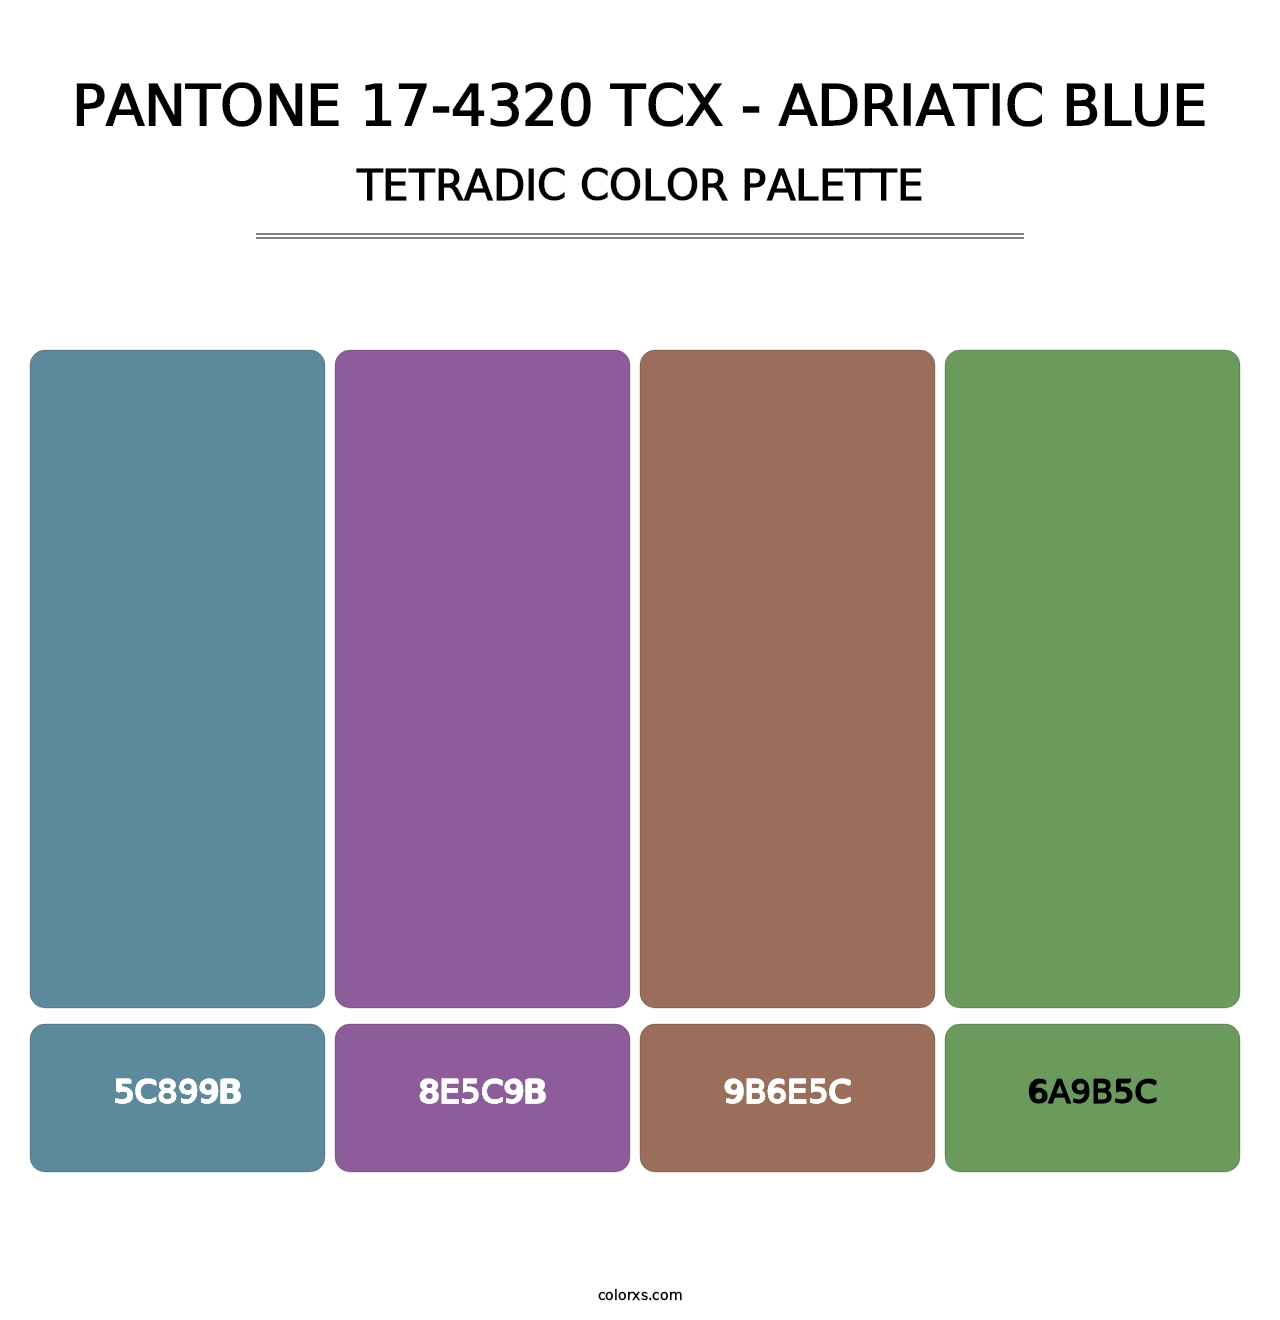 PANTONE 17-4320 TCX - Adriatic Blue - Tetradic Color Palette